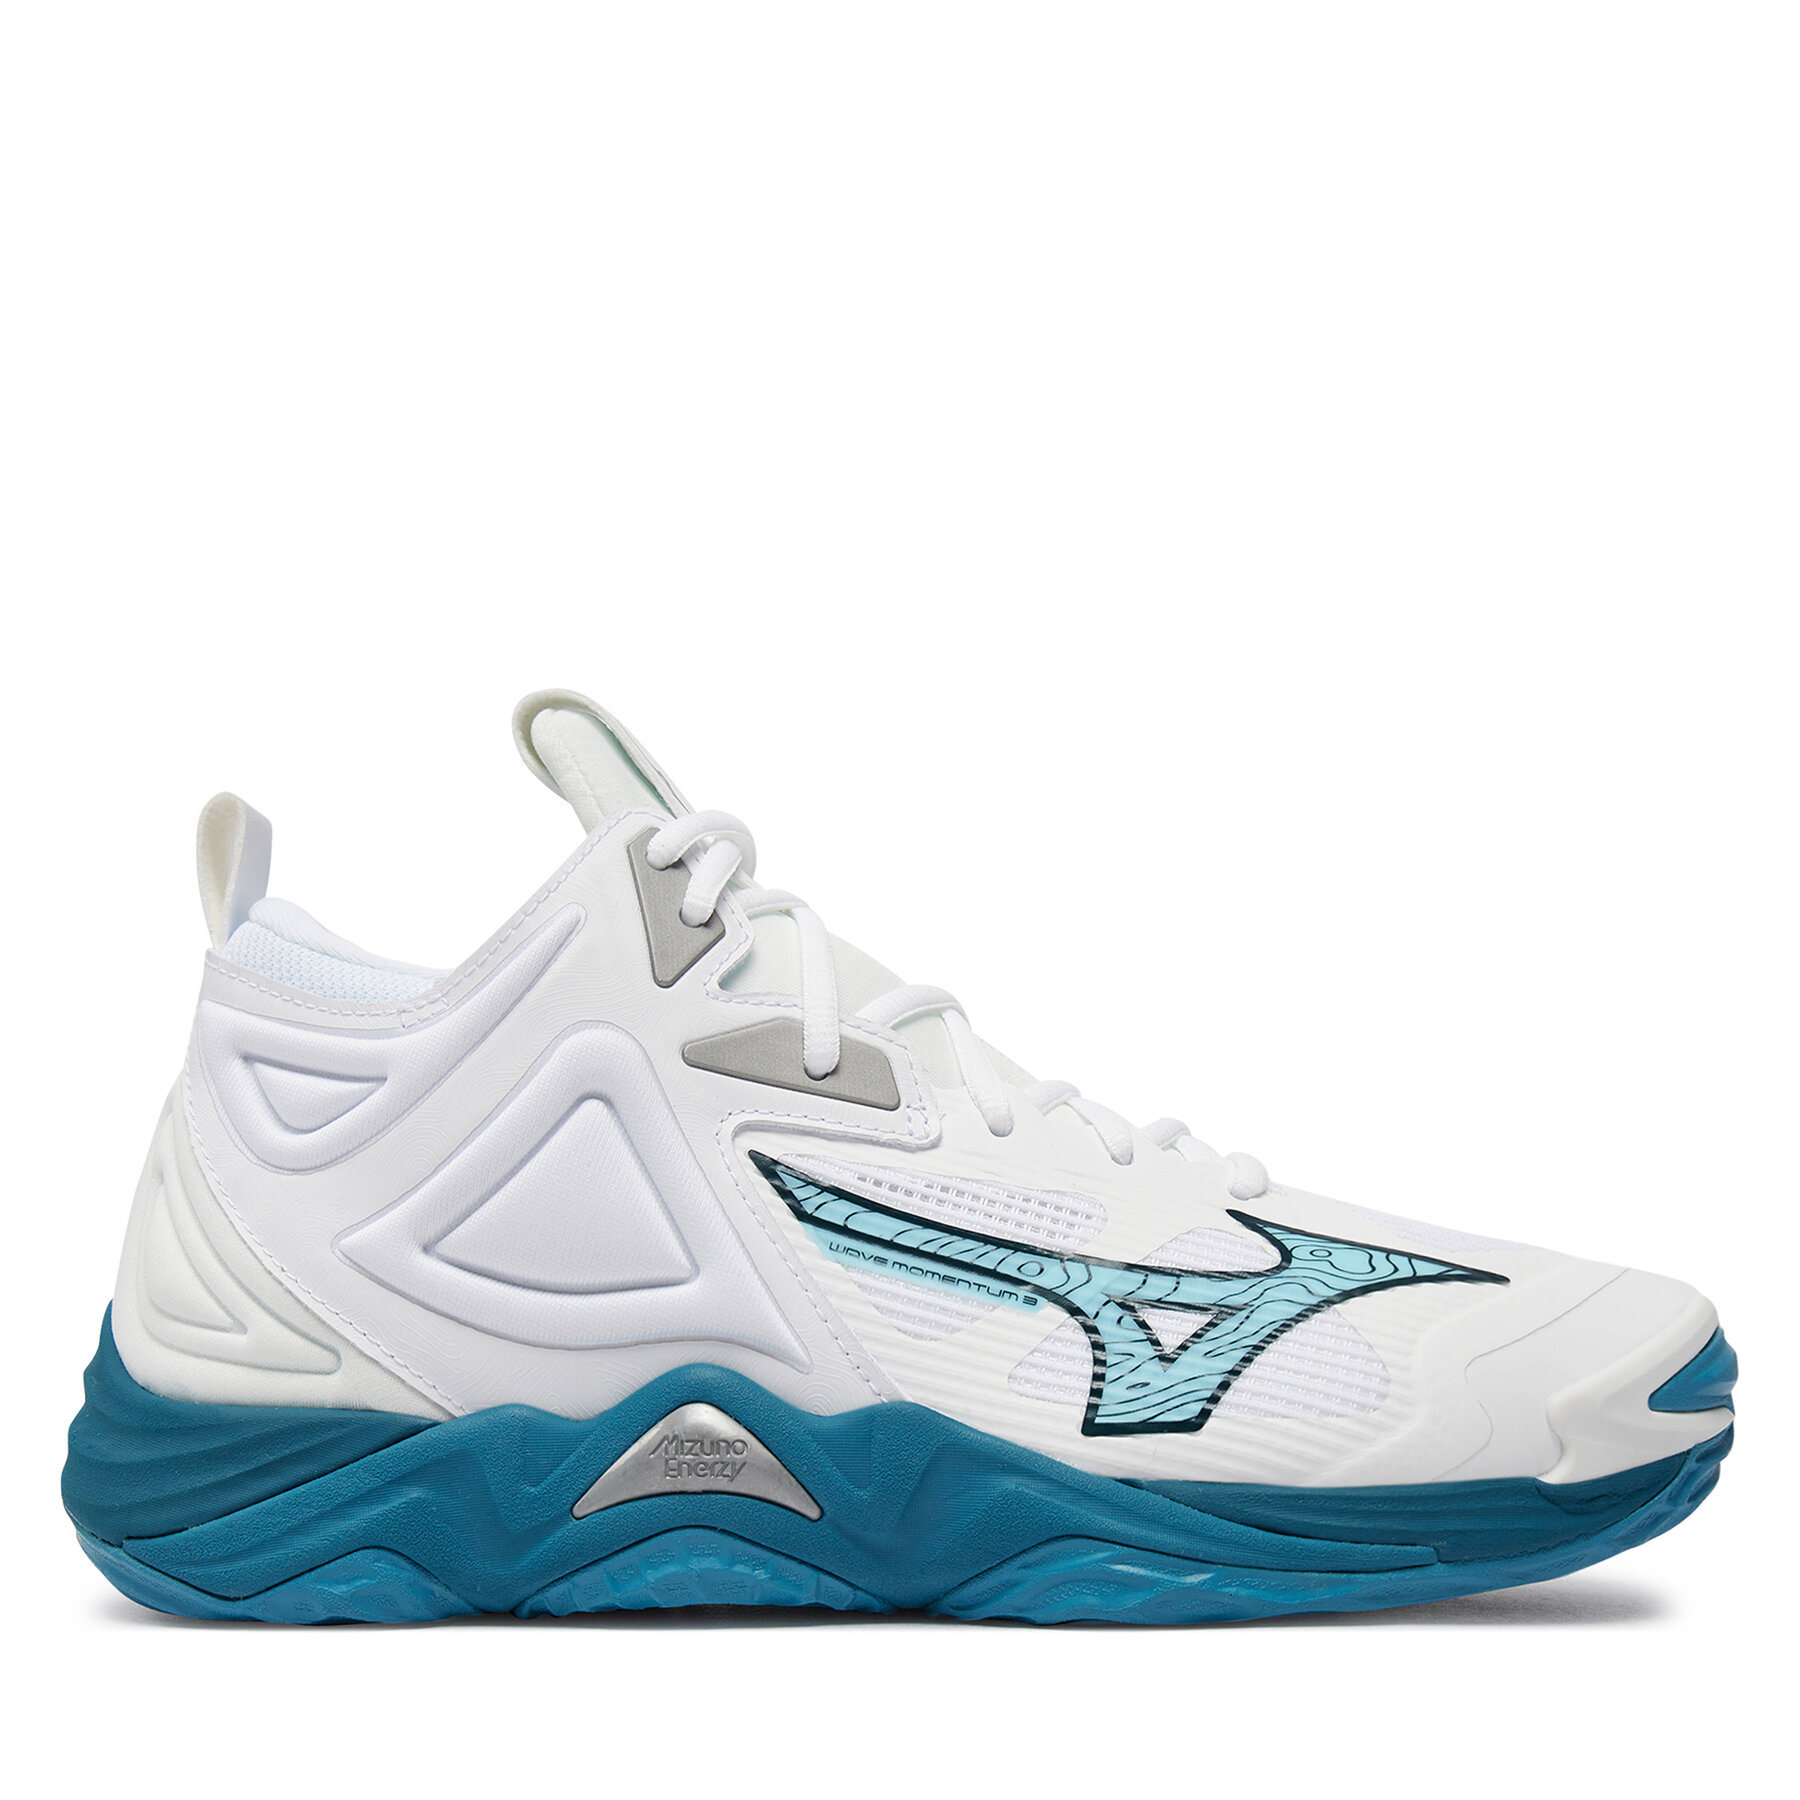 Schuhe Mizuno Wave Momentum 3 Mid V1GA2317 White/Sailor Blue/Silver 21 von Mizuno